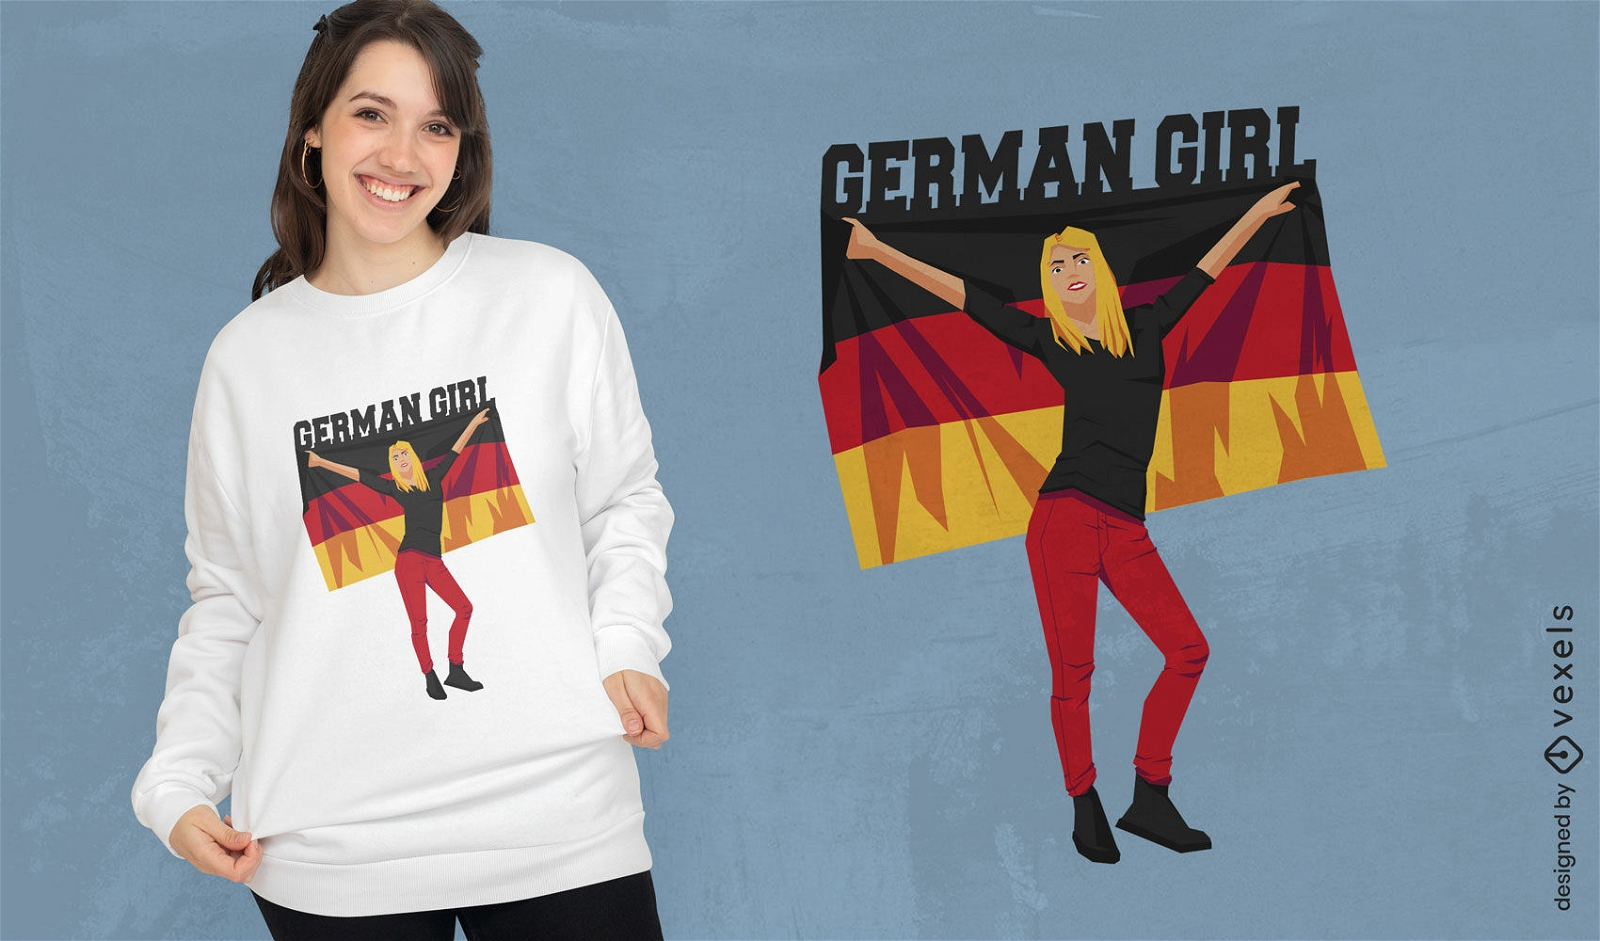 German girl flag t-shirt design